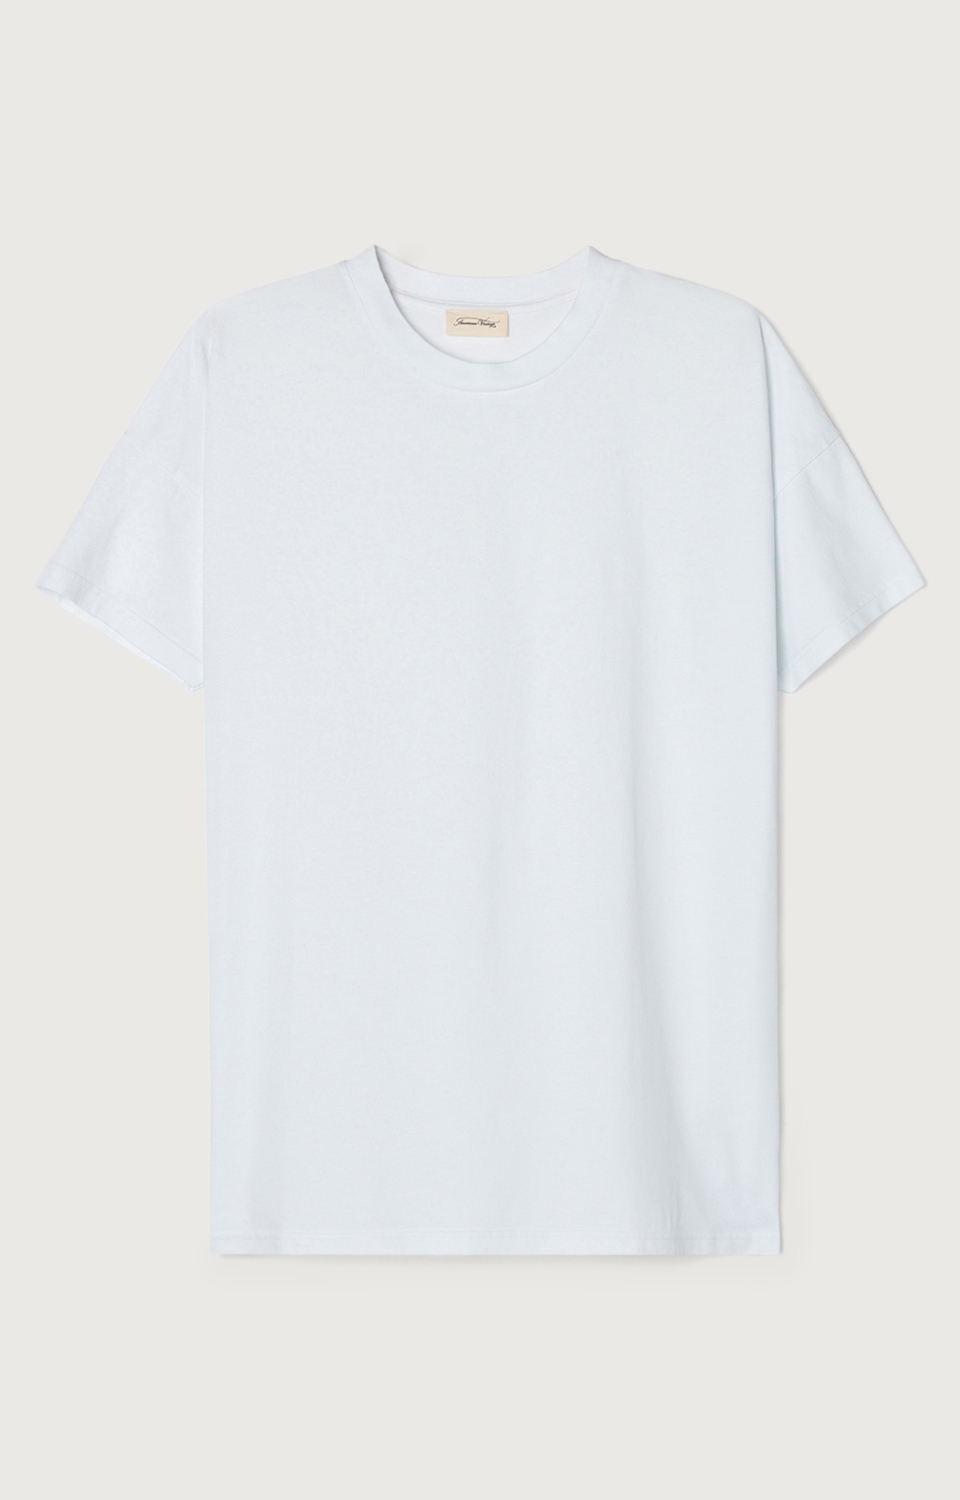 American Vintage Fizvalley T-Shirt - White